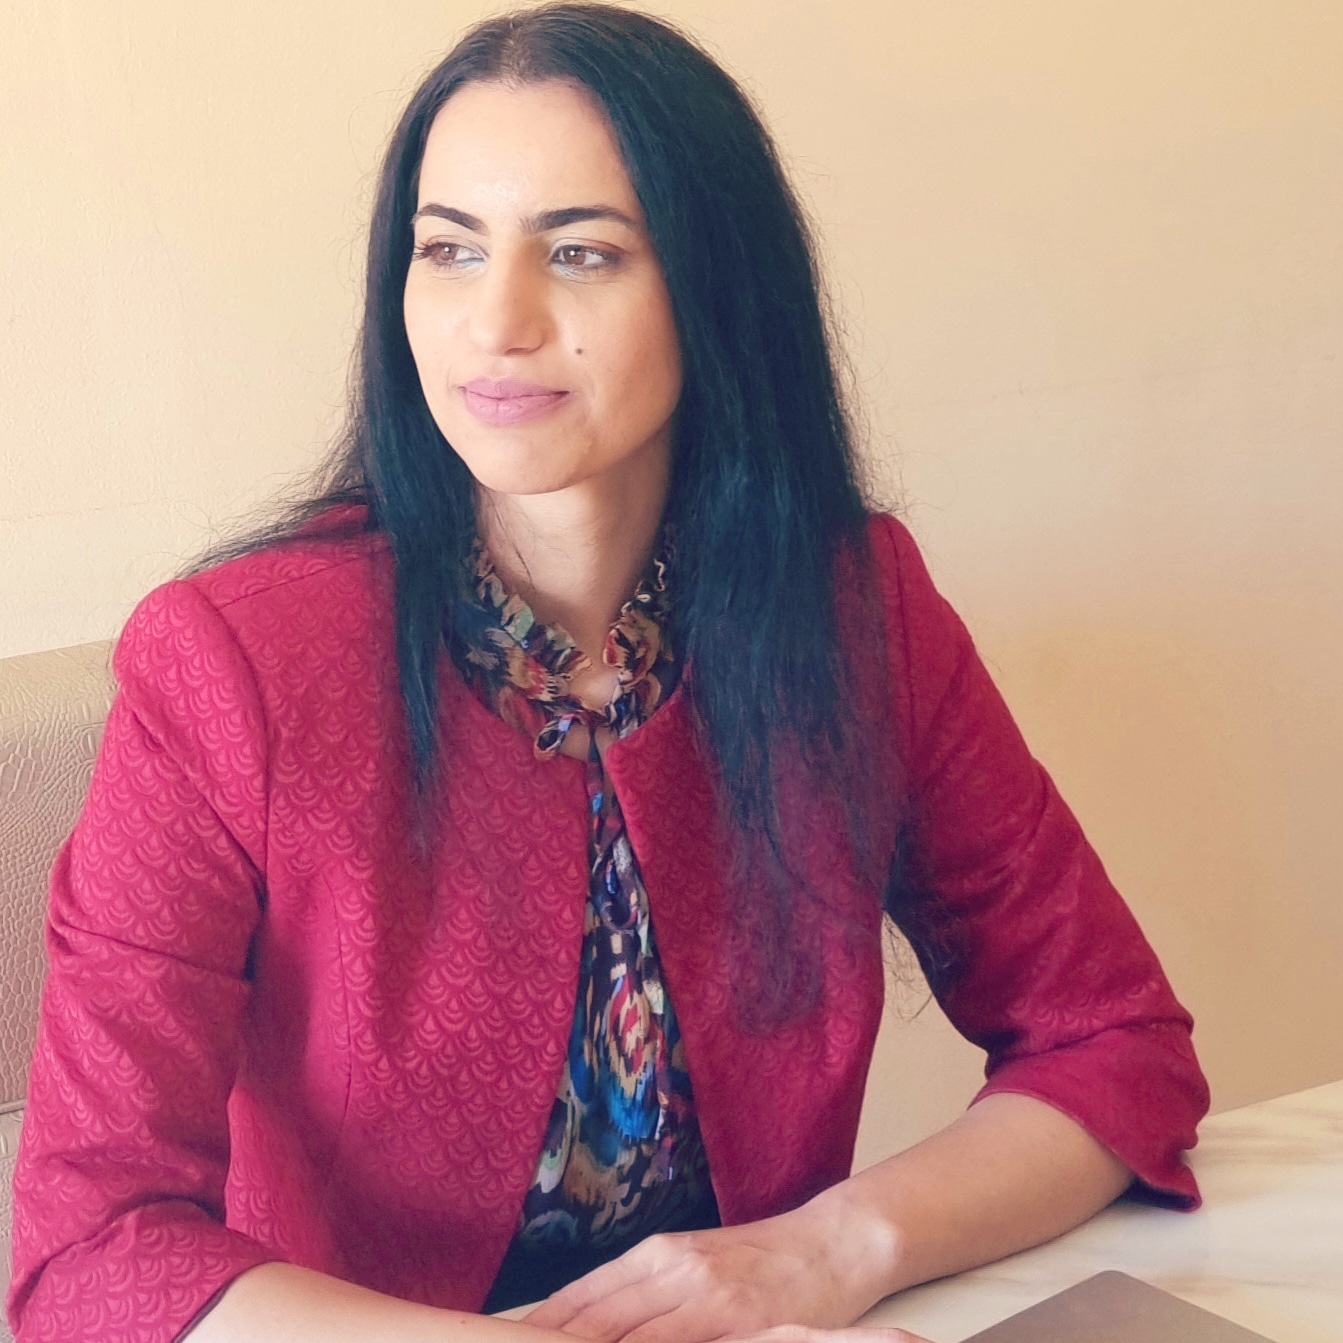 Avatar of Basma Saade - Experienced Mentor at Mentorverse.io | Online Mentorship Platform